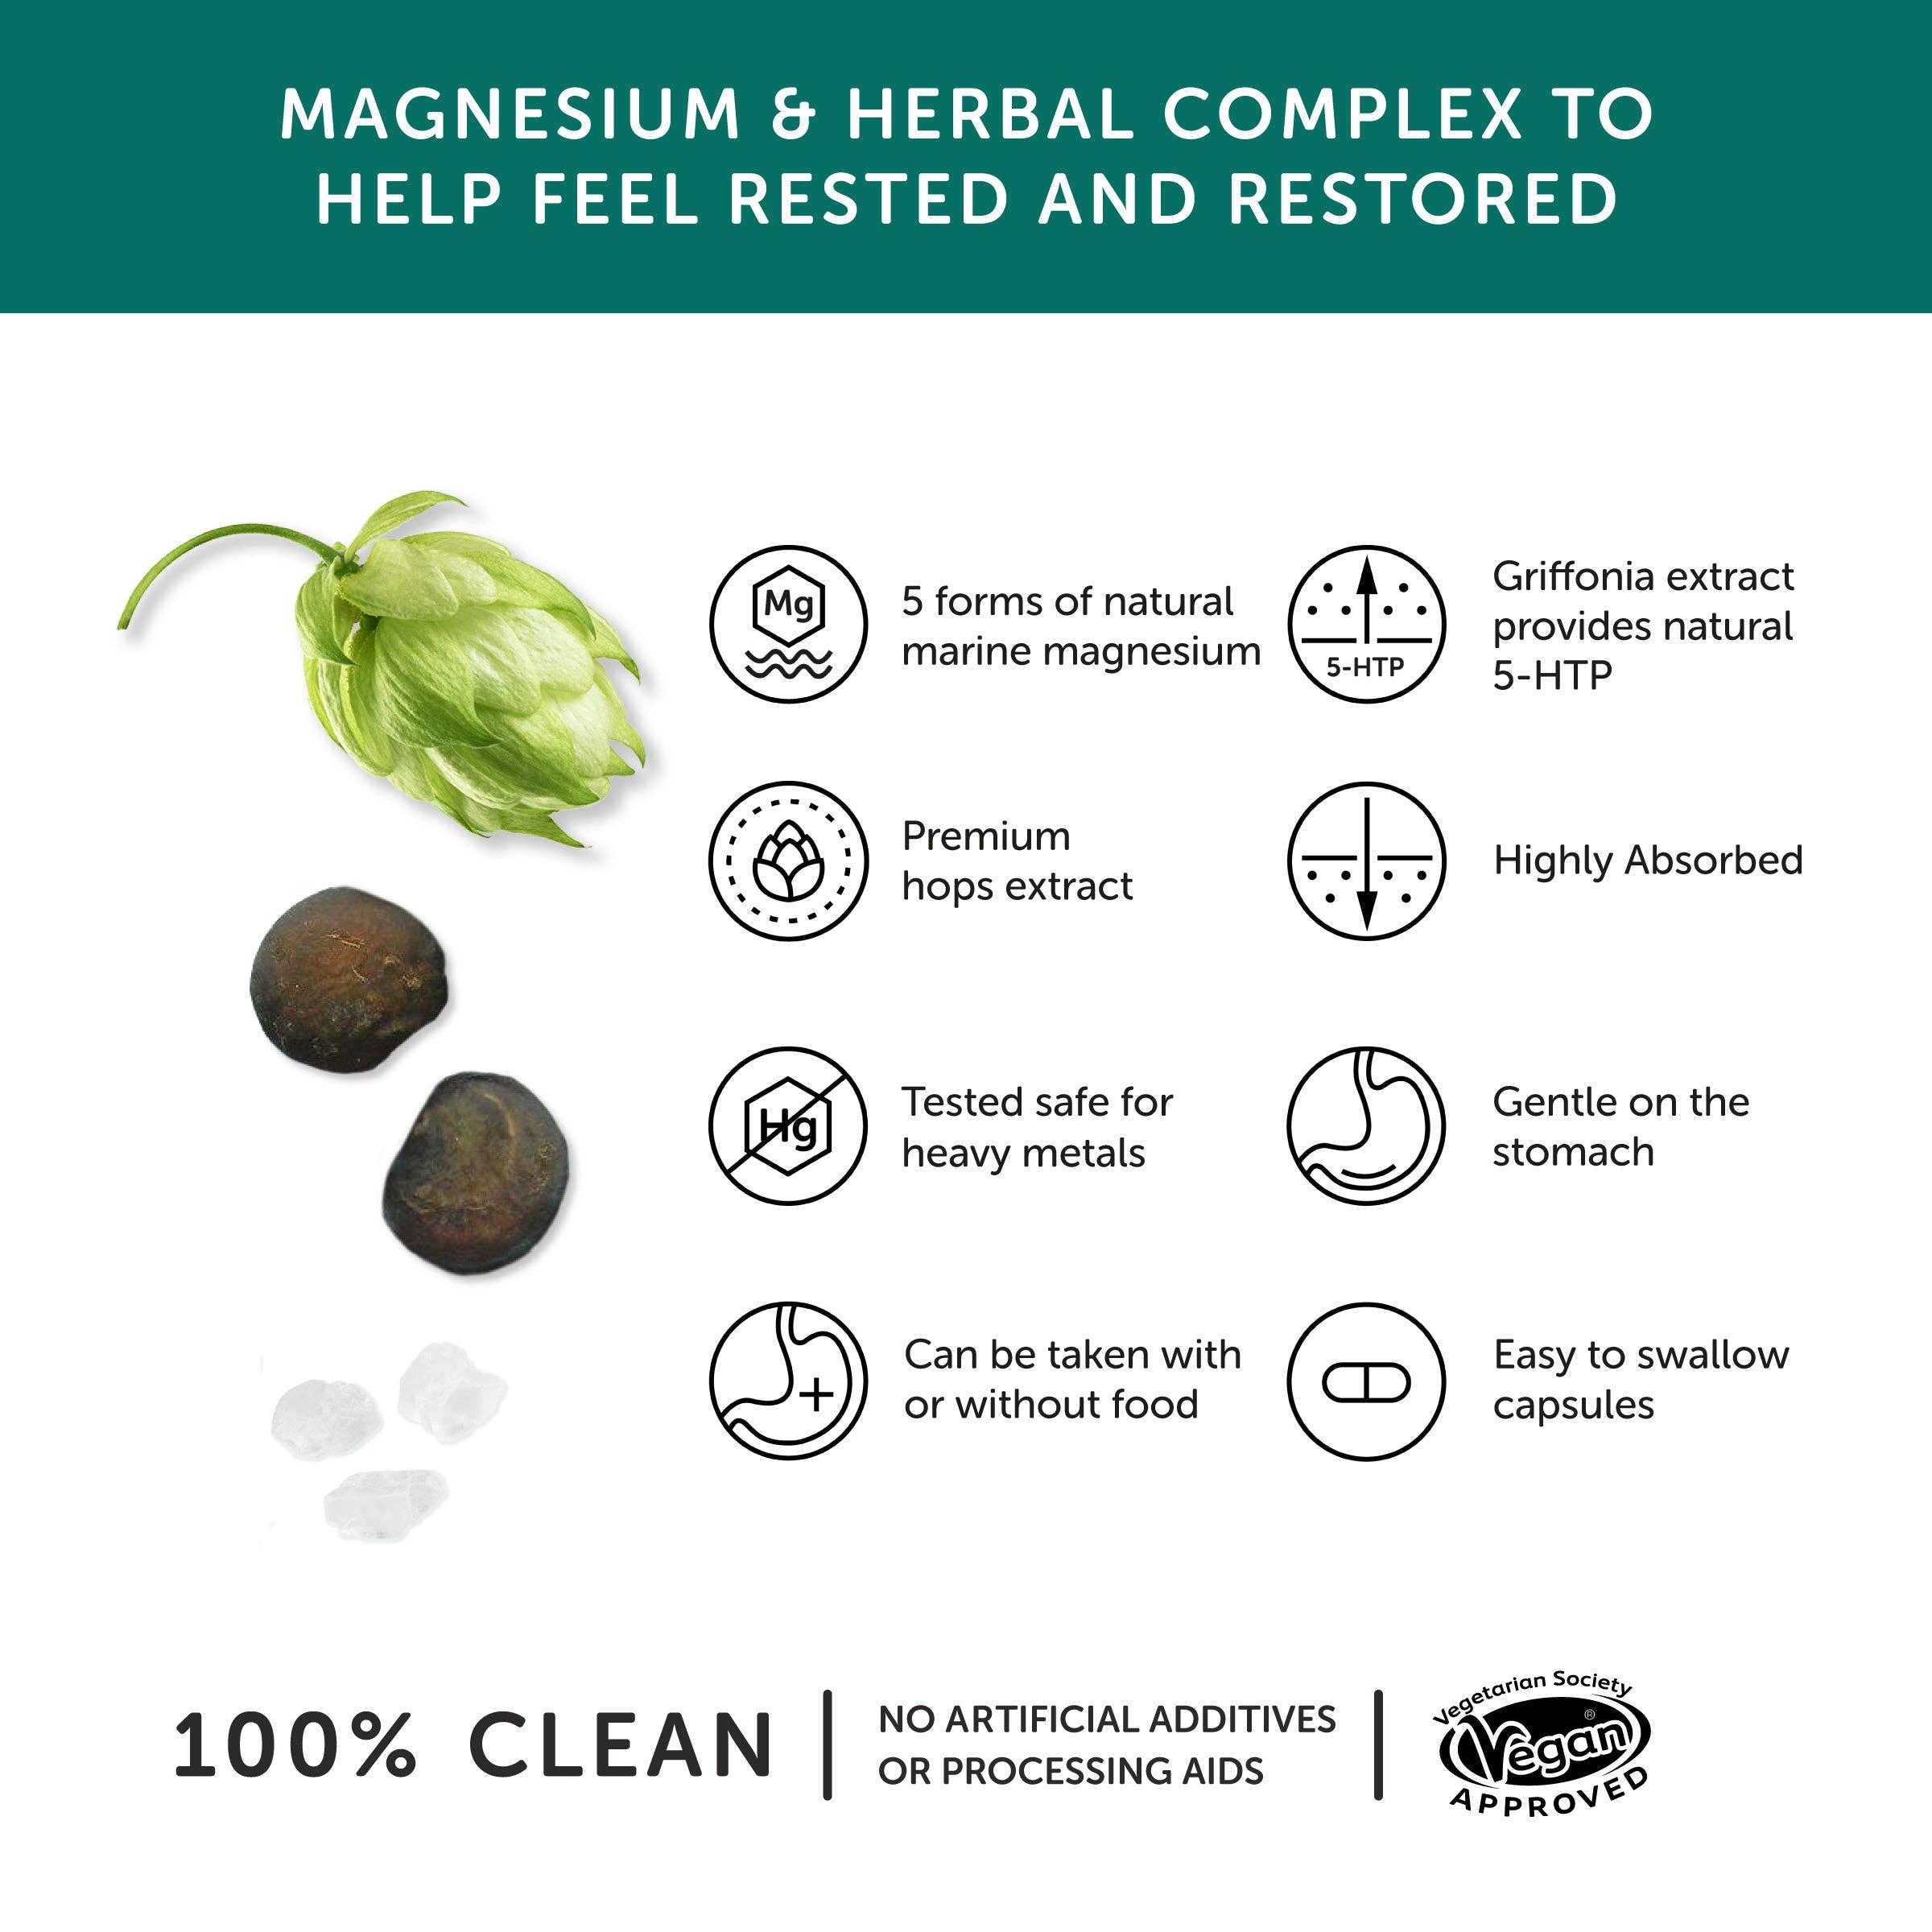 Night Time – Magnesium & Herbal Sleeping Aid